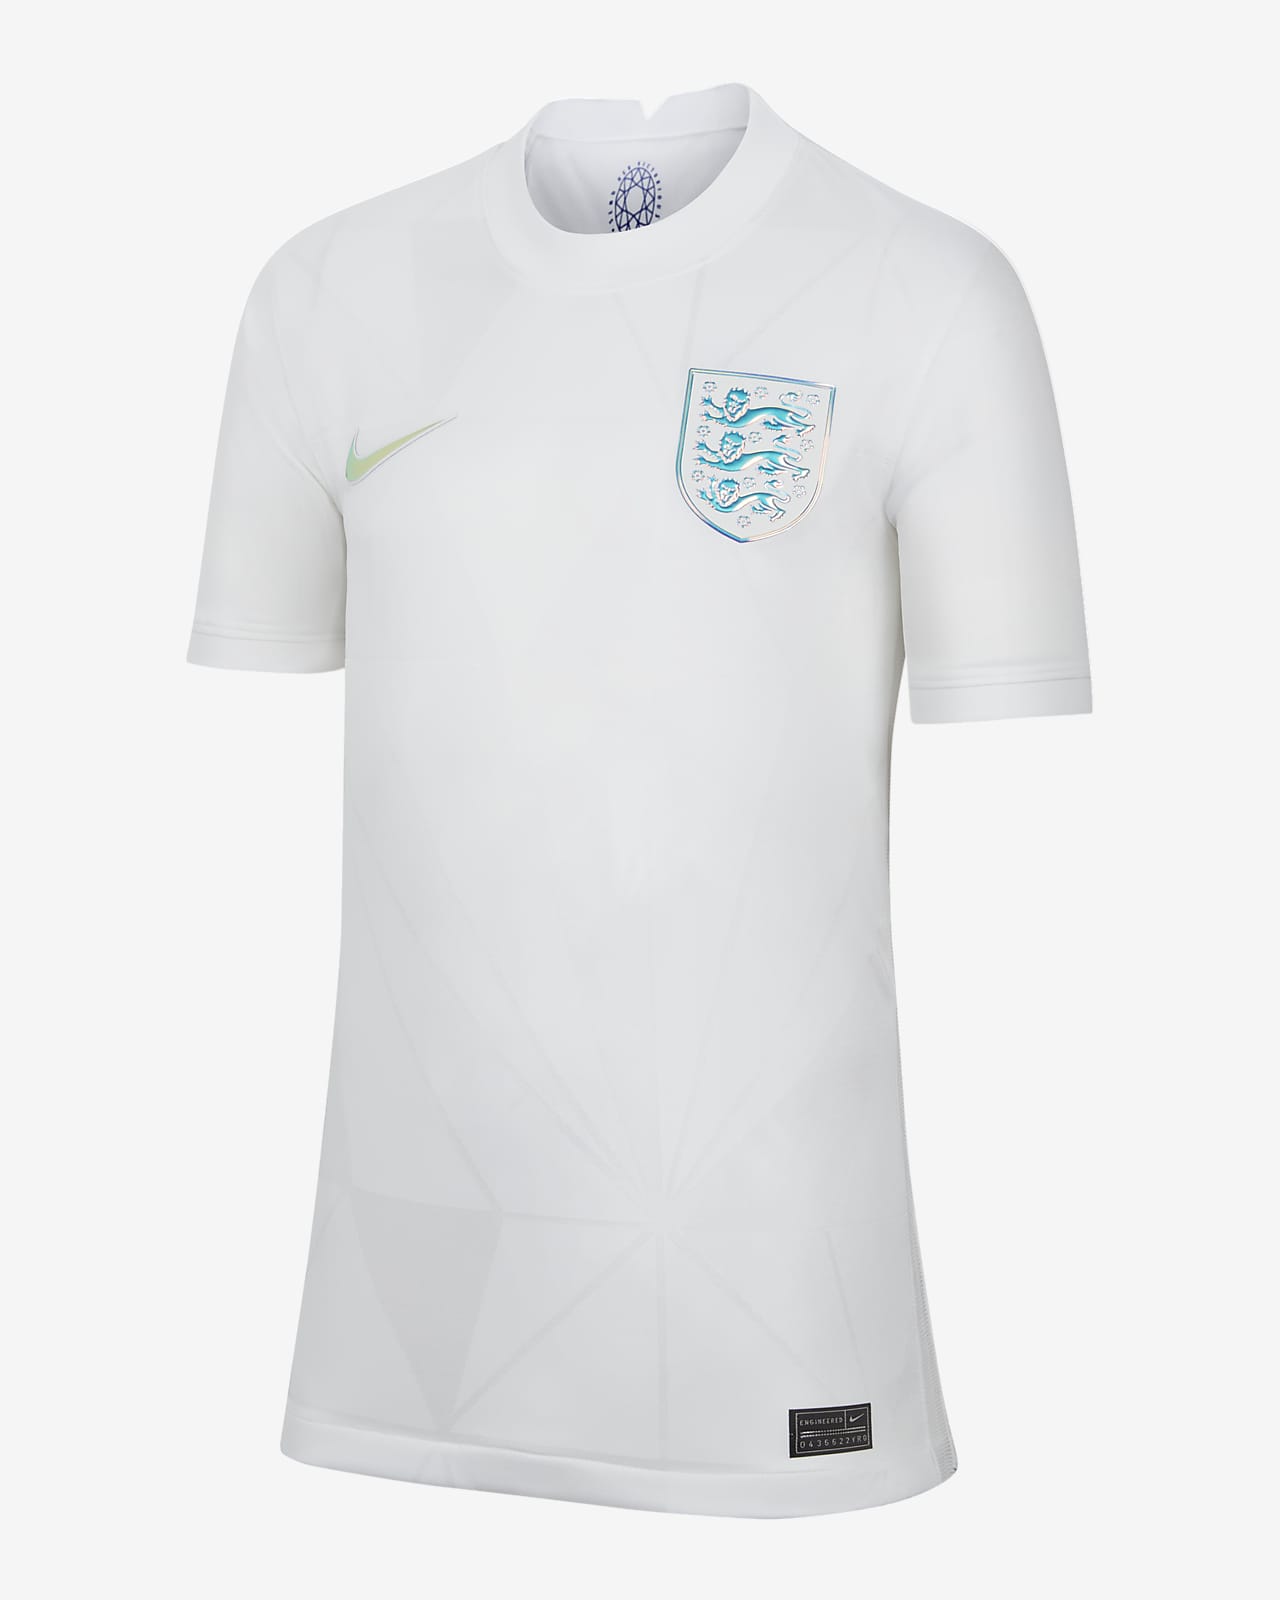 England 2022 Stadium Home Older Kids' Nike Dri-FIT Football Shirt